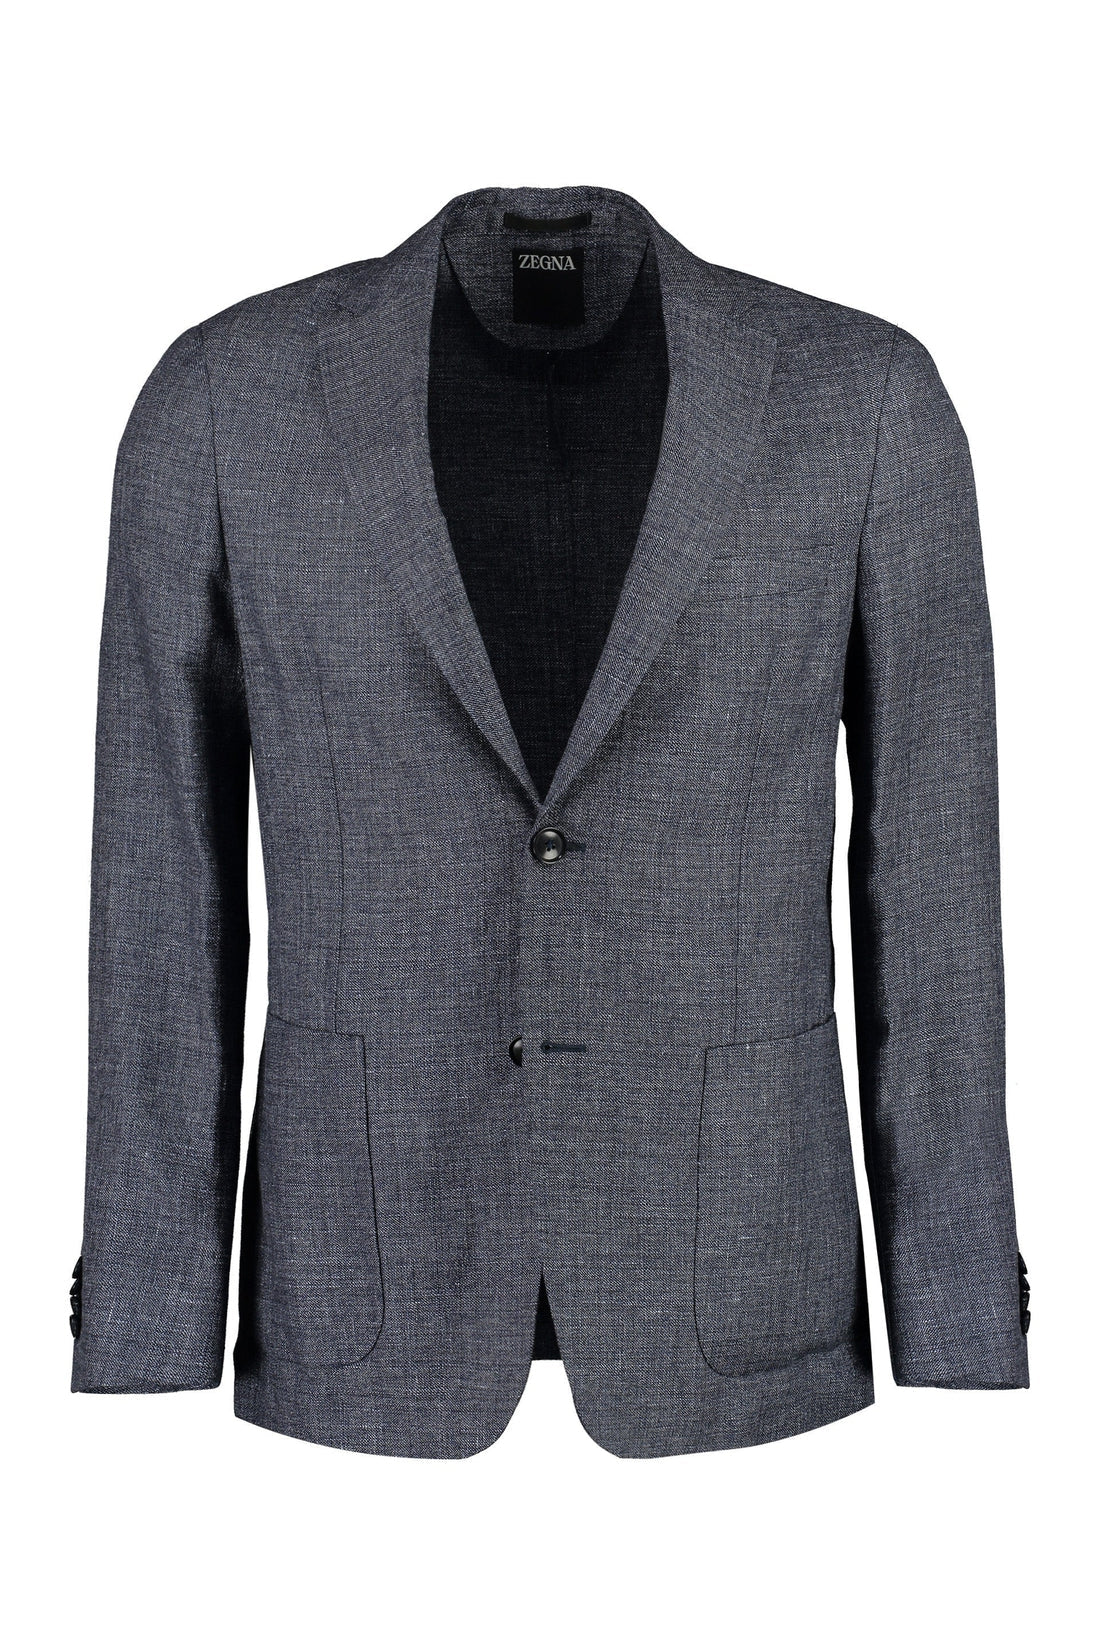 Zegna-OUTLET-SALE-Wool blend single-breast jacket-ARCHIVIST